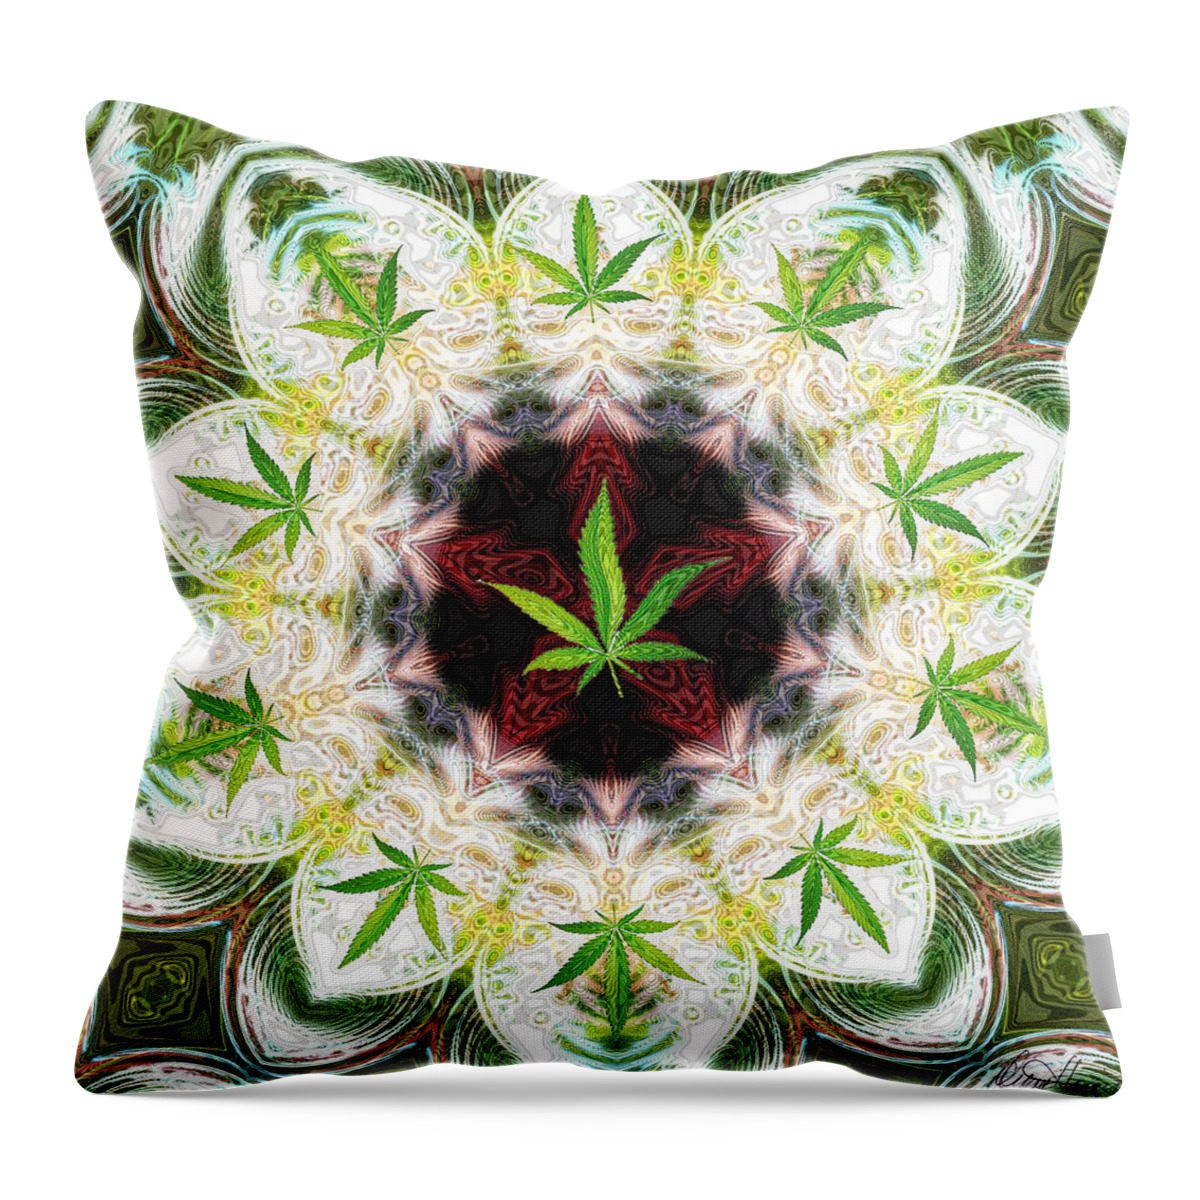 Mandala Throw Pillow featuring the digital art Sweetleaf Mandala by Diana Haronis